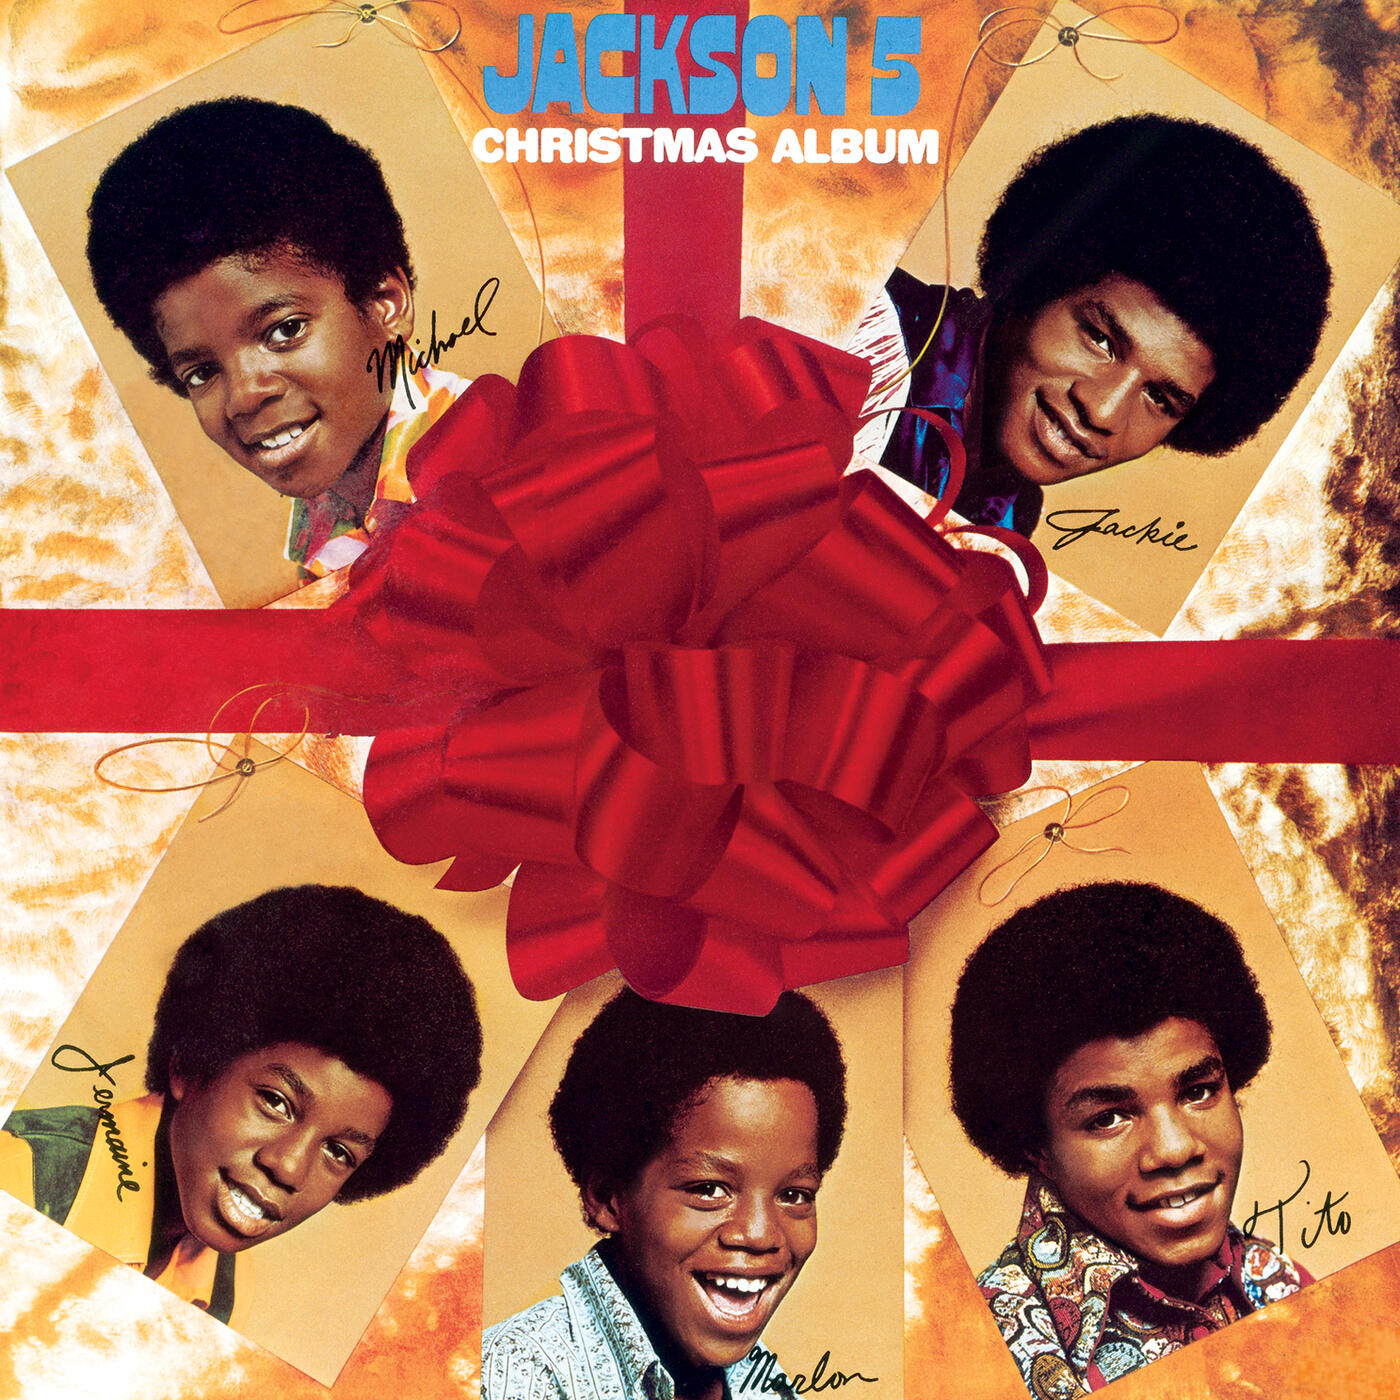 Listen Free to The Jackson 5 - Christmas Album Radio on iHeartRadio | iHeartRadio